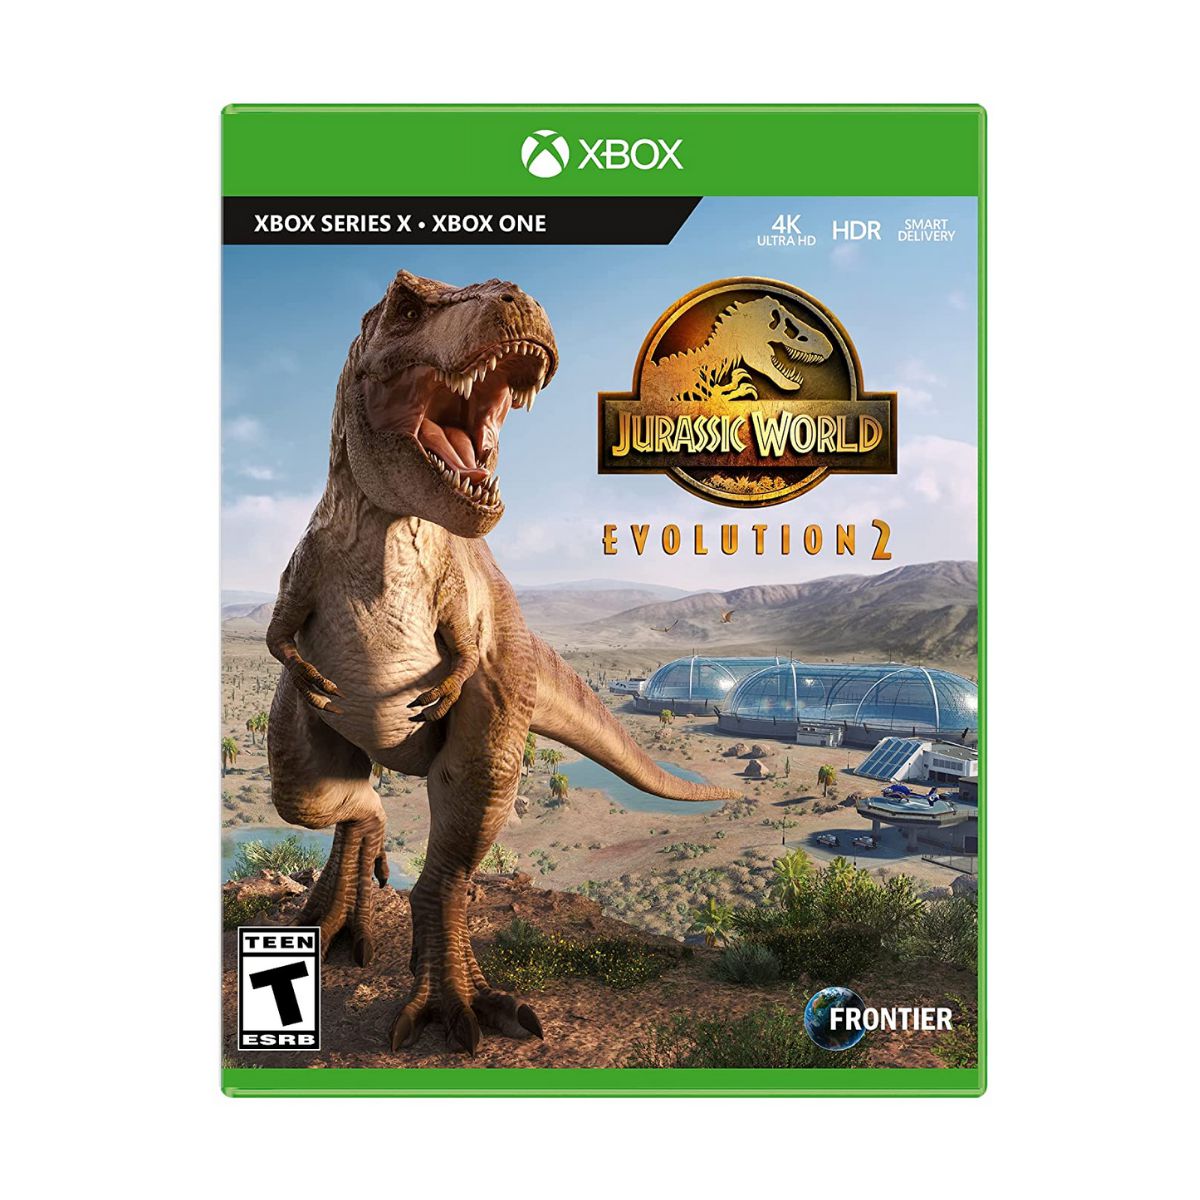 Jurassic World Evolution 2 - Xbox One, Xbox Series X/S - Game